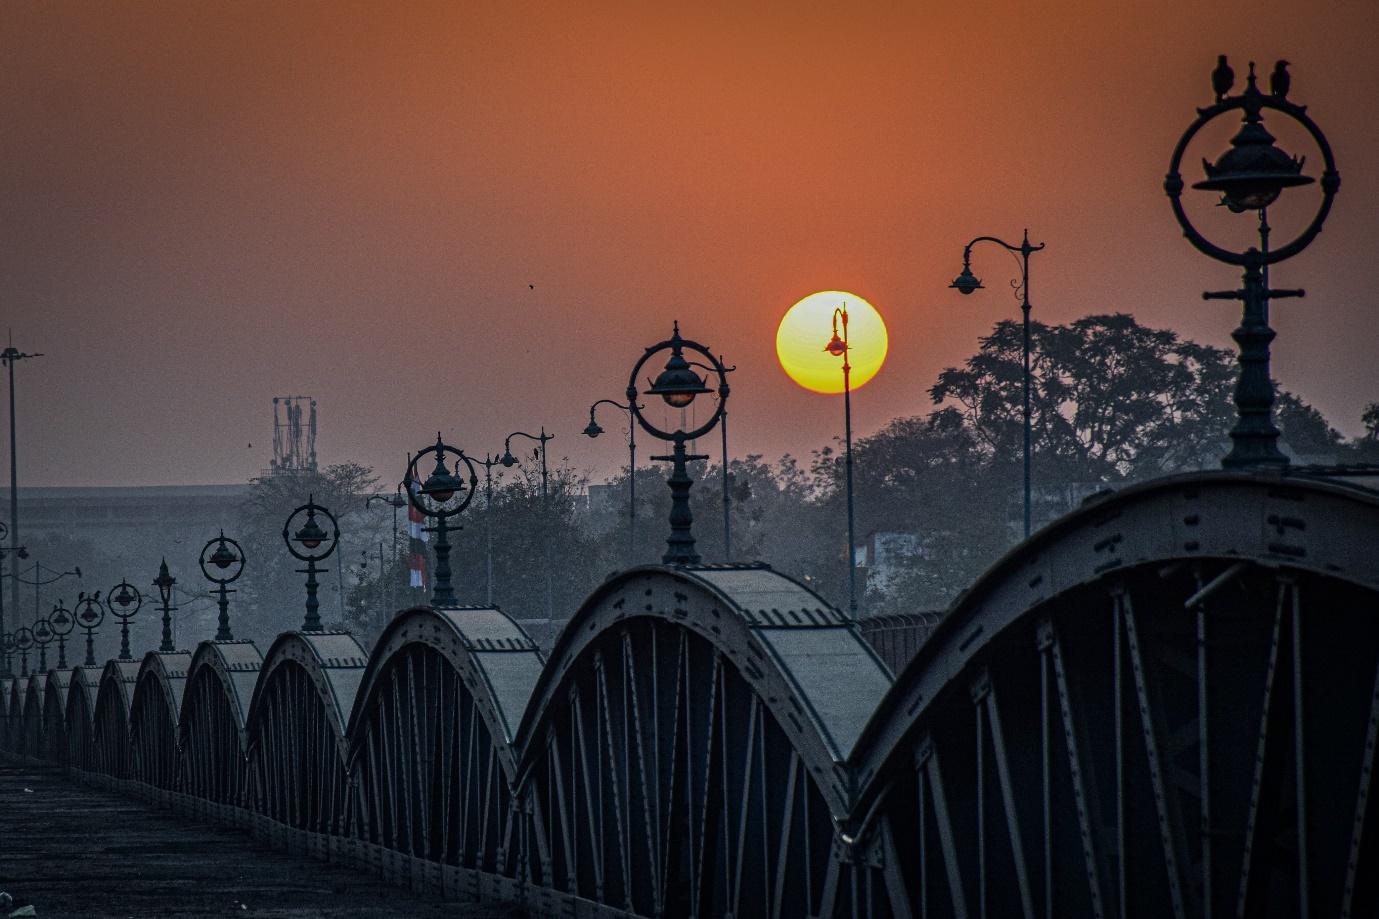 the historical Ellis Bridge at sunset | Wedifys